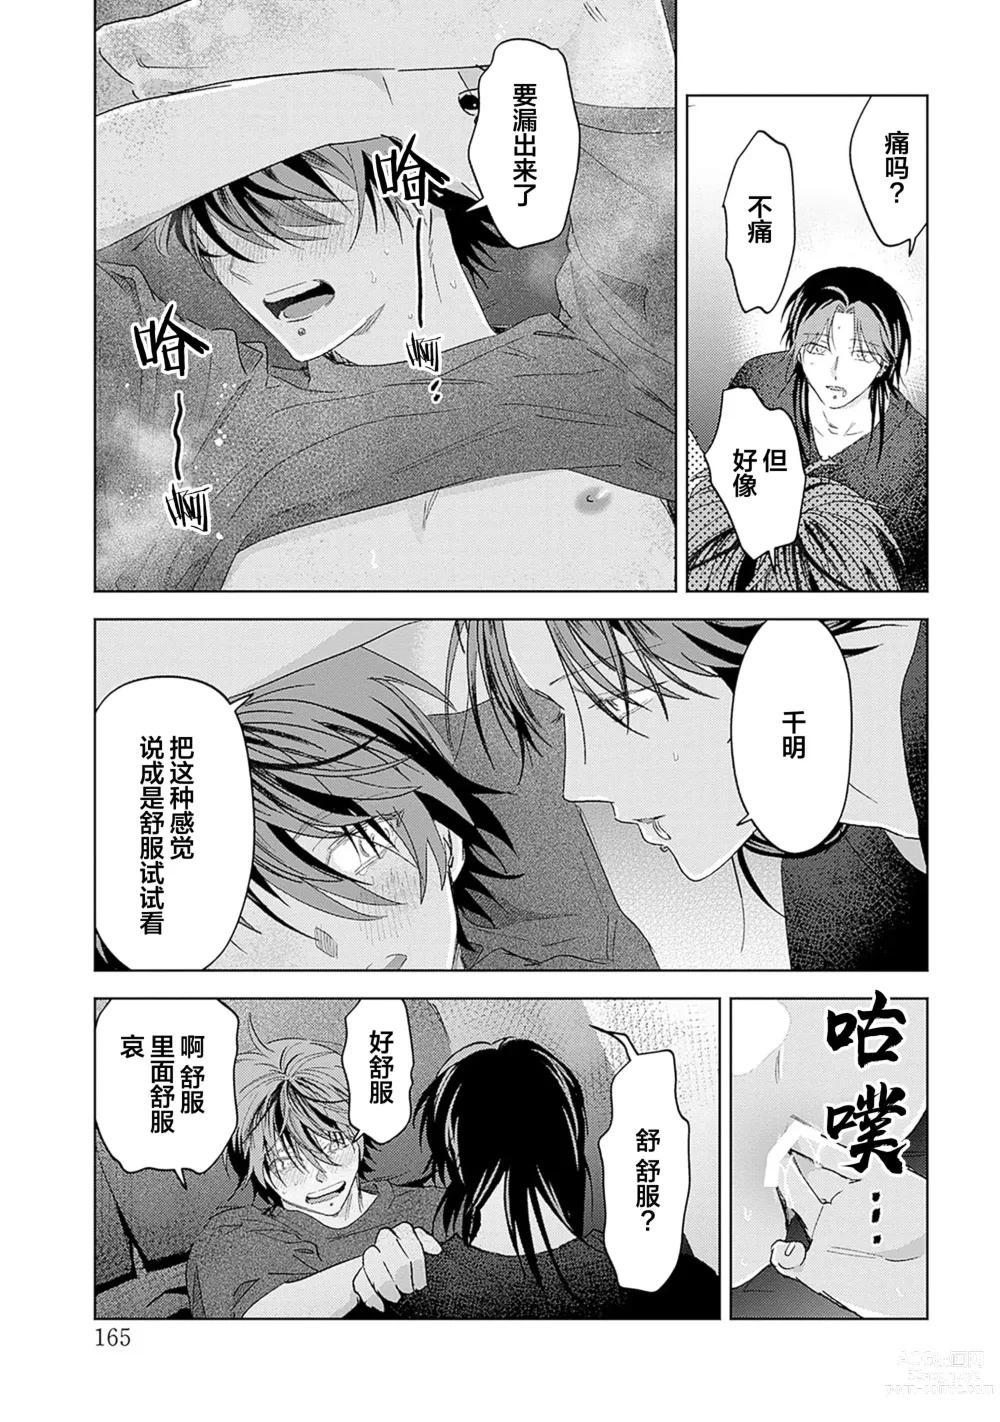 Page 255 of manga 朋克三角